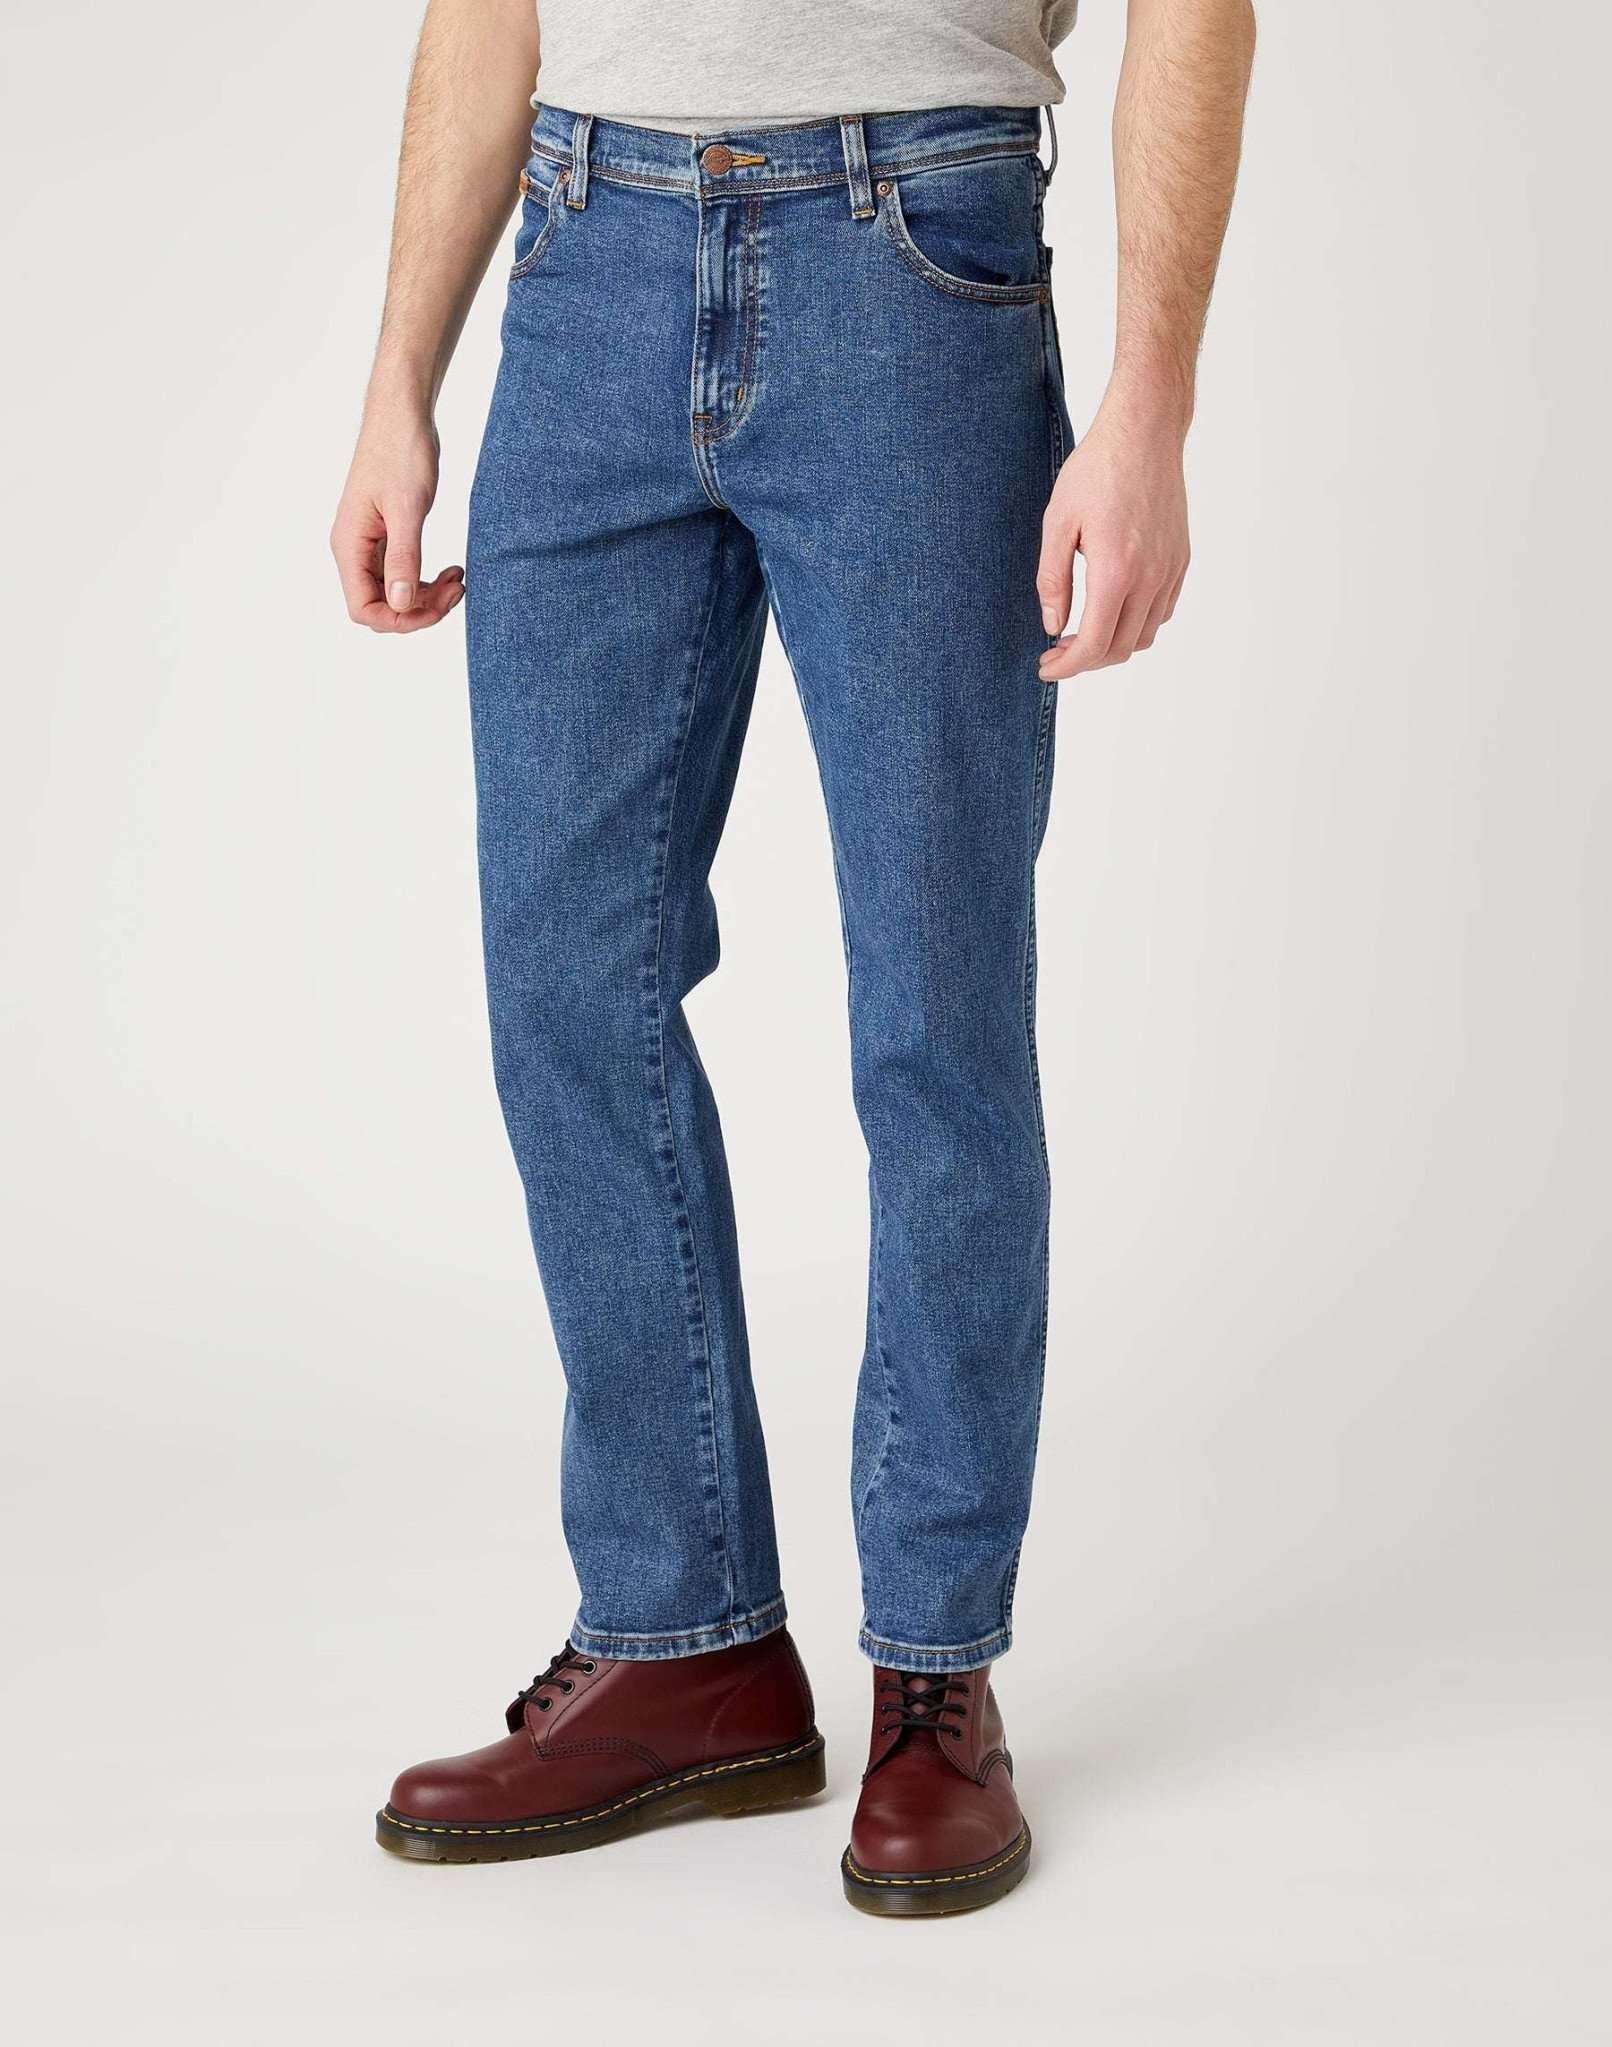 Jeans Straight Leg Texas Slim Herren Blau Denim L32/W33 von Wrangler